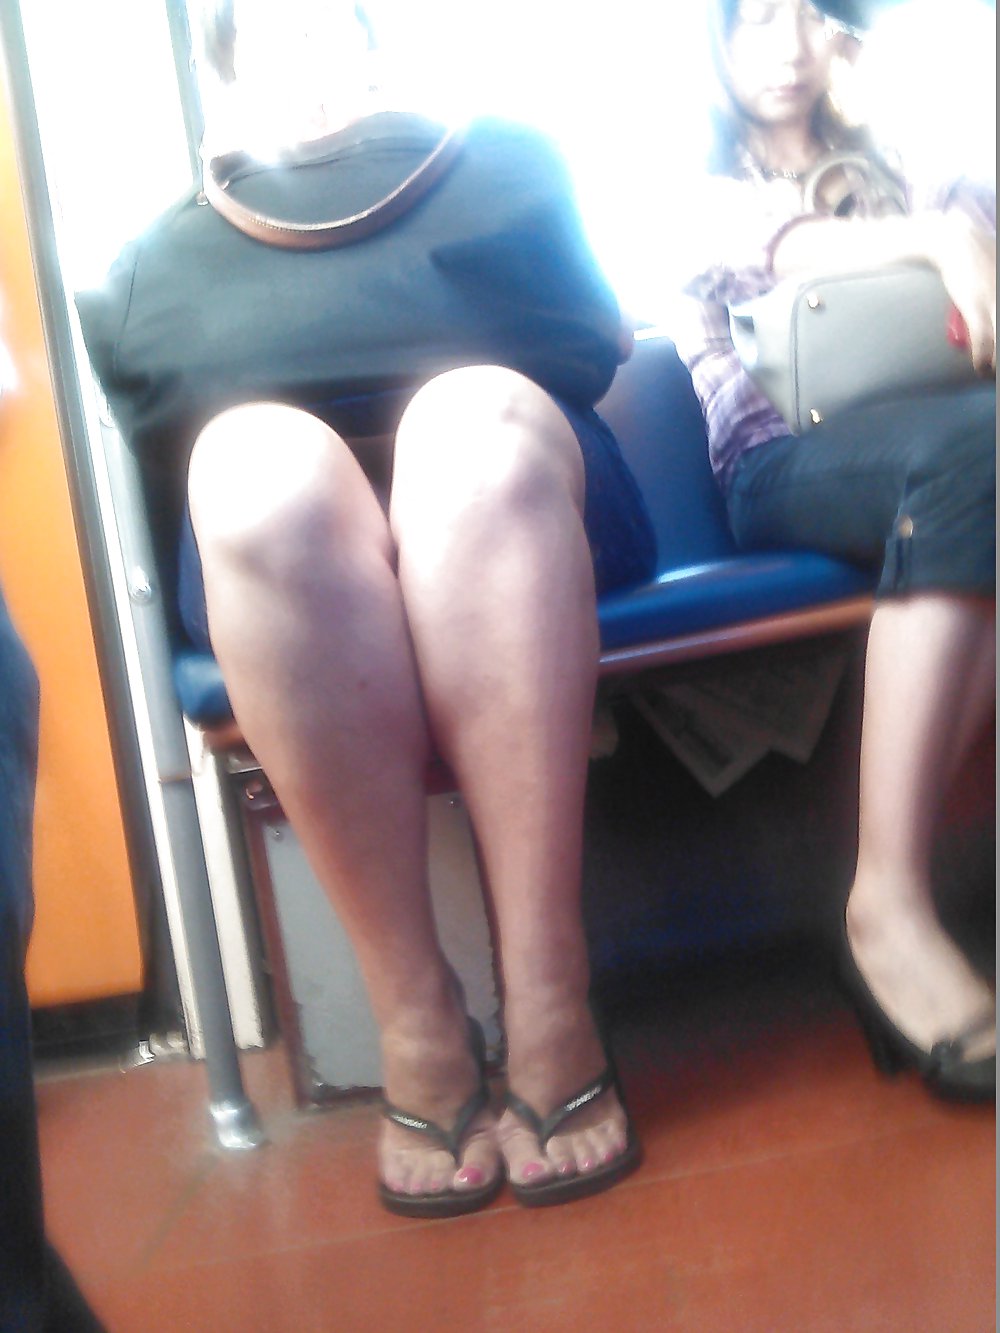 More voyeur pics on the train #37677389